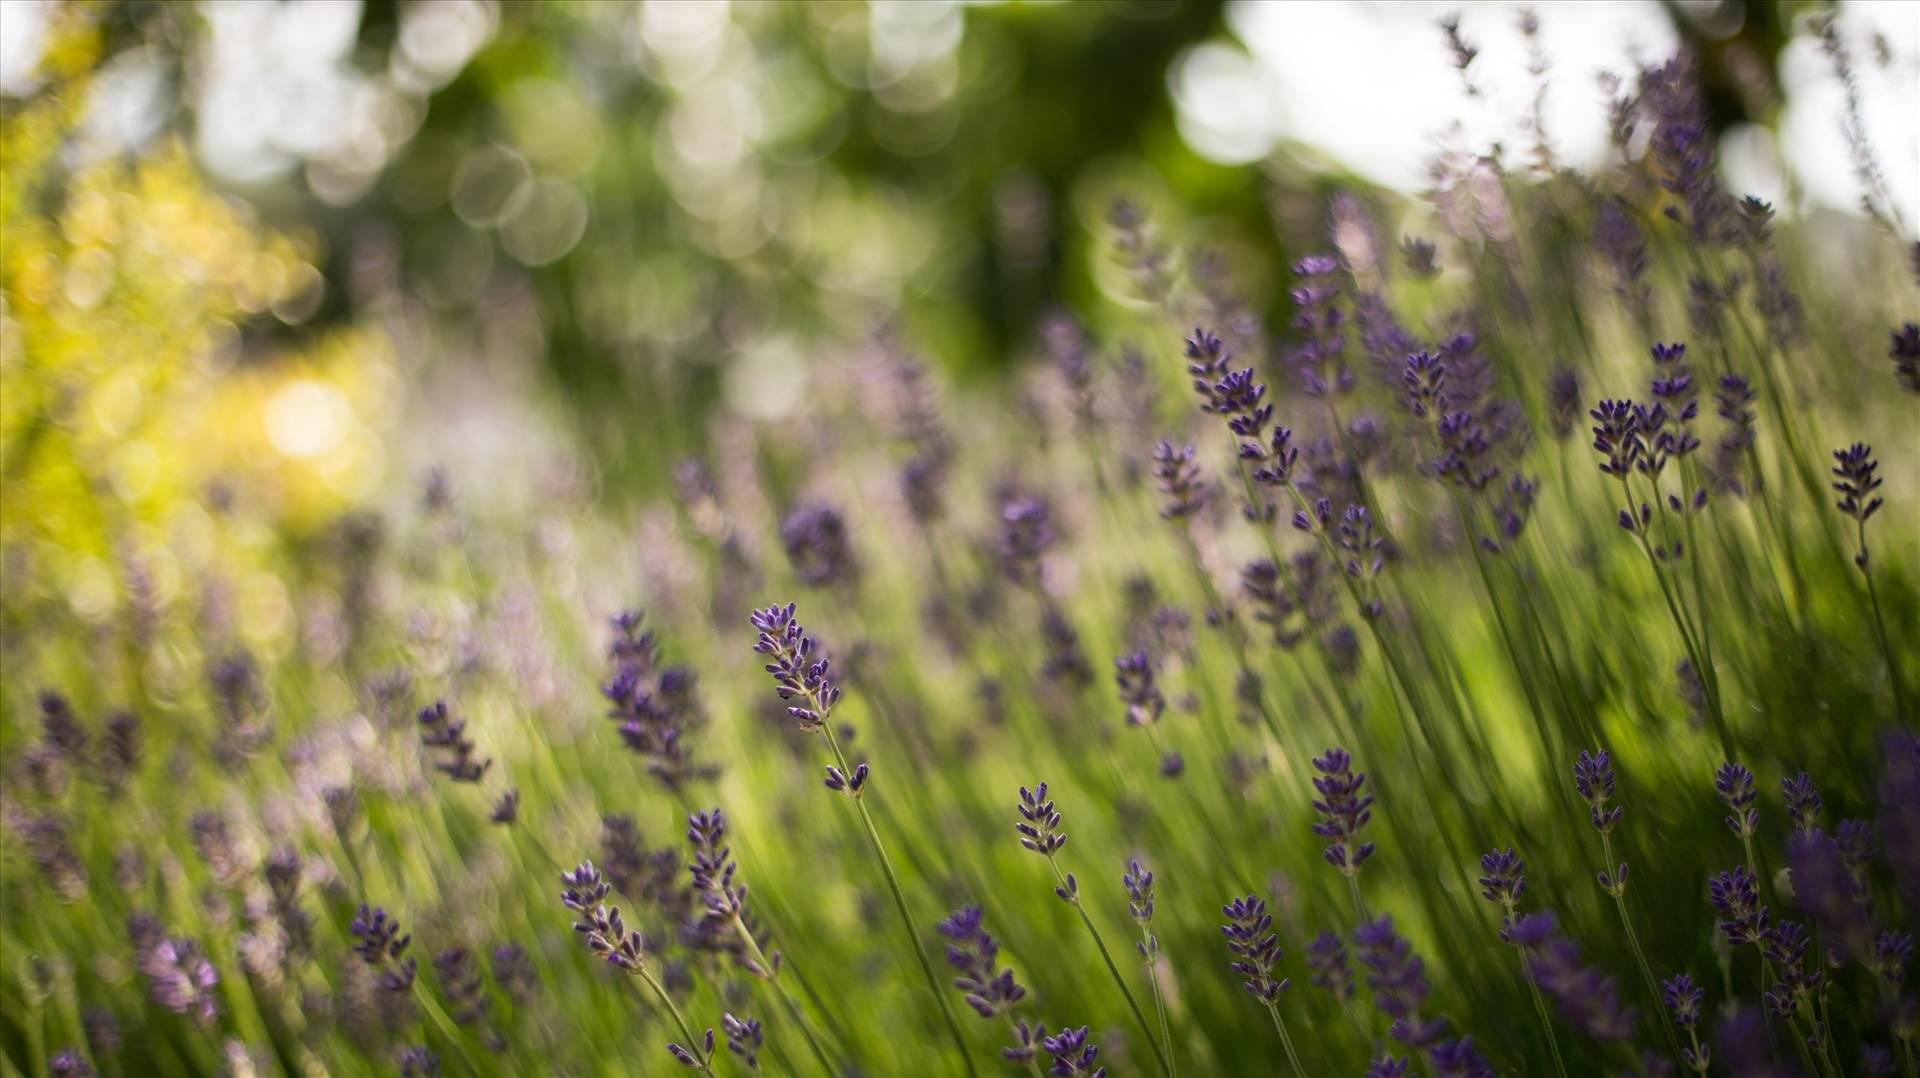 Lavender 3.jpg  by WPC-187